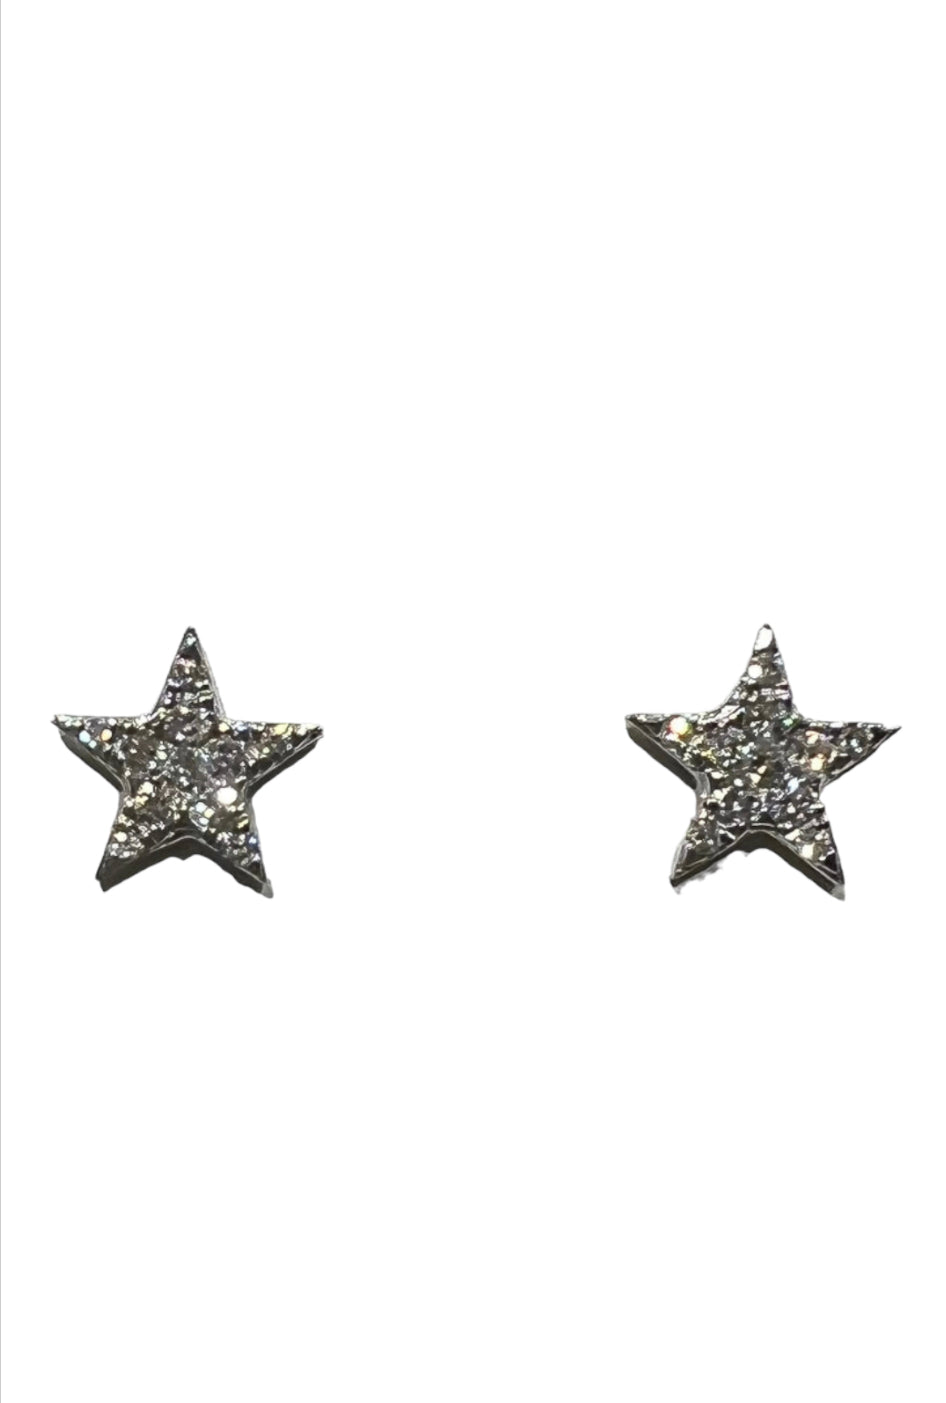 S.Row Designs Diamond Star Stud Earrings